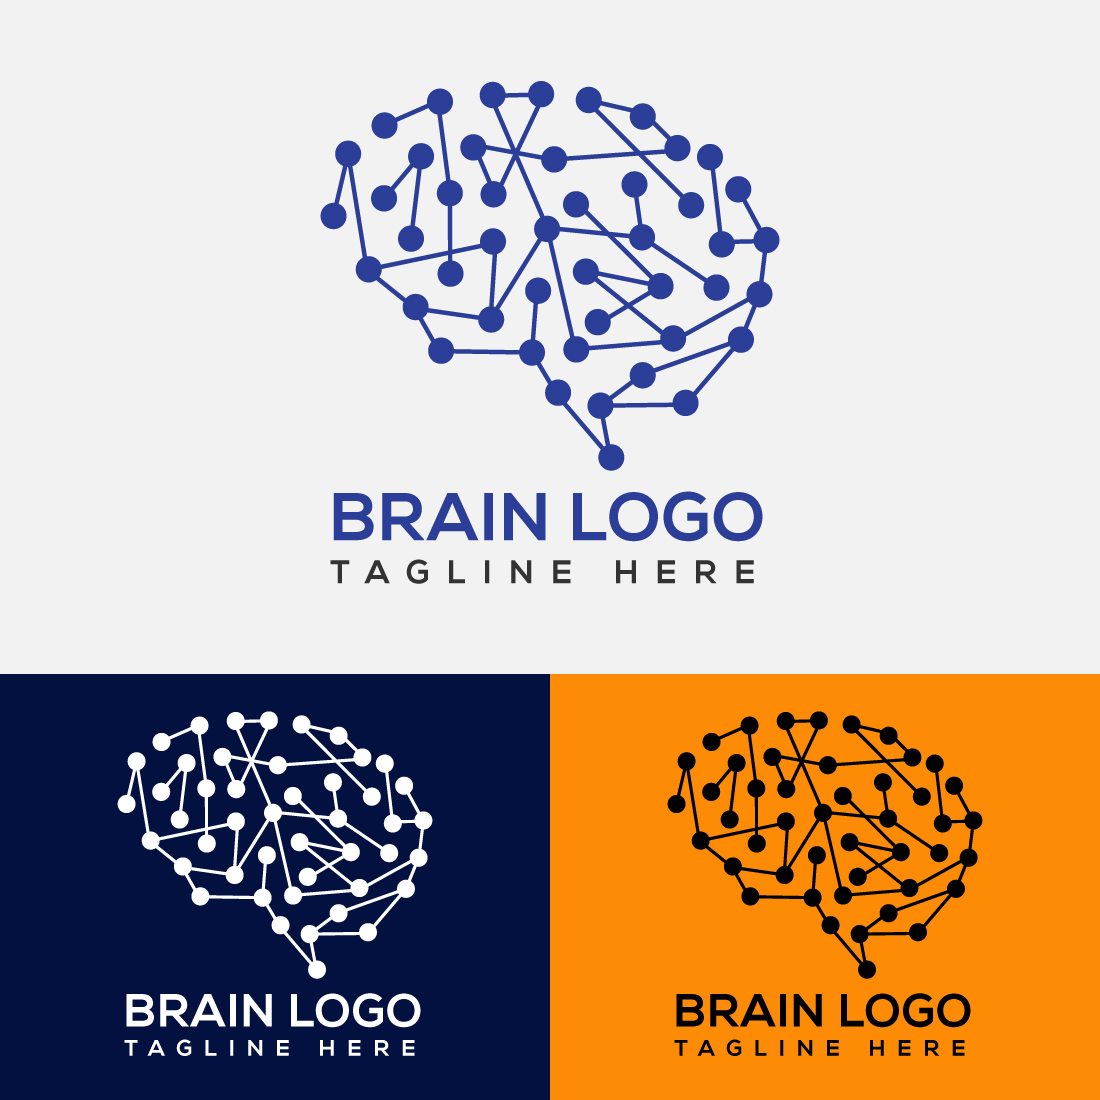 Brain Logo Vector Template main cover.